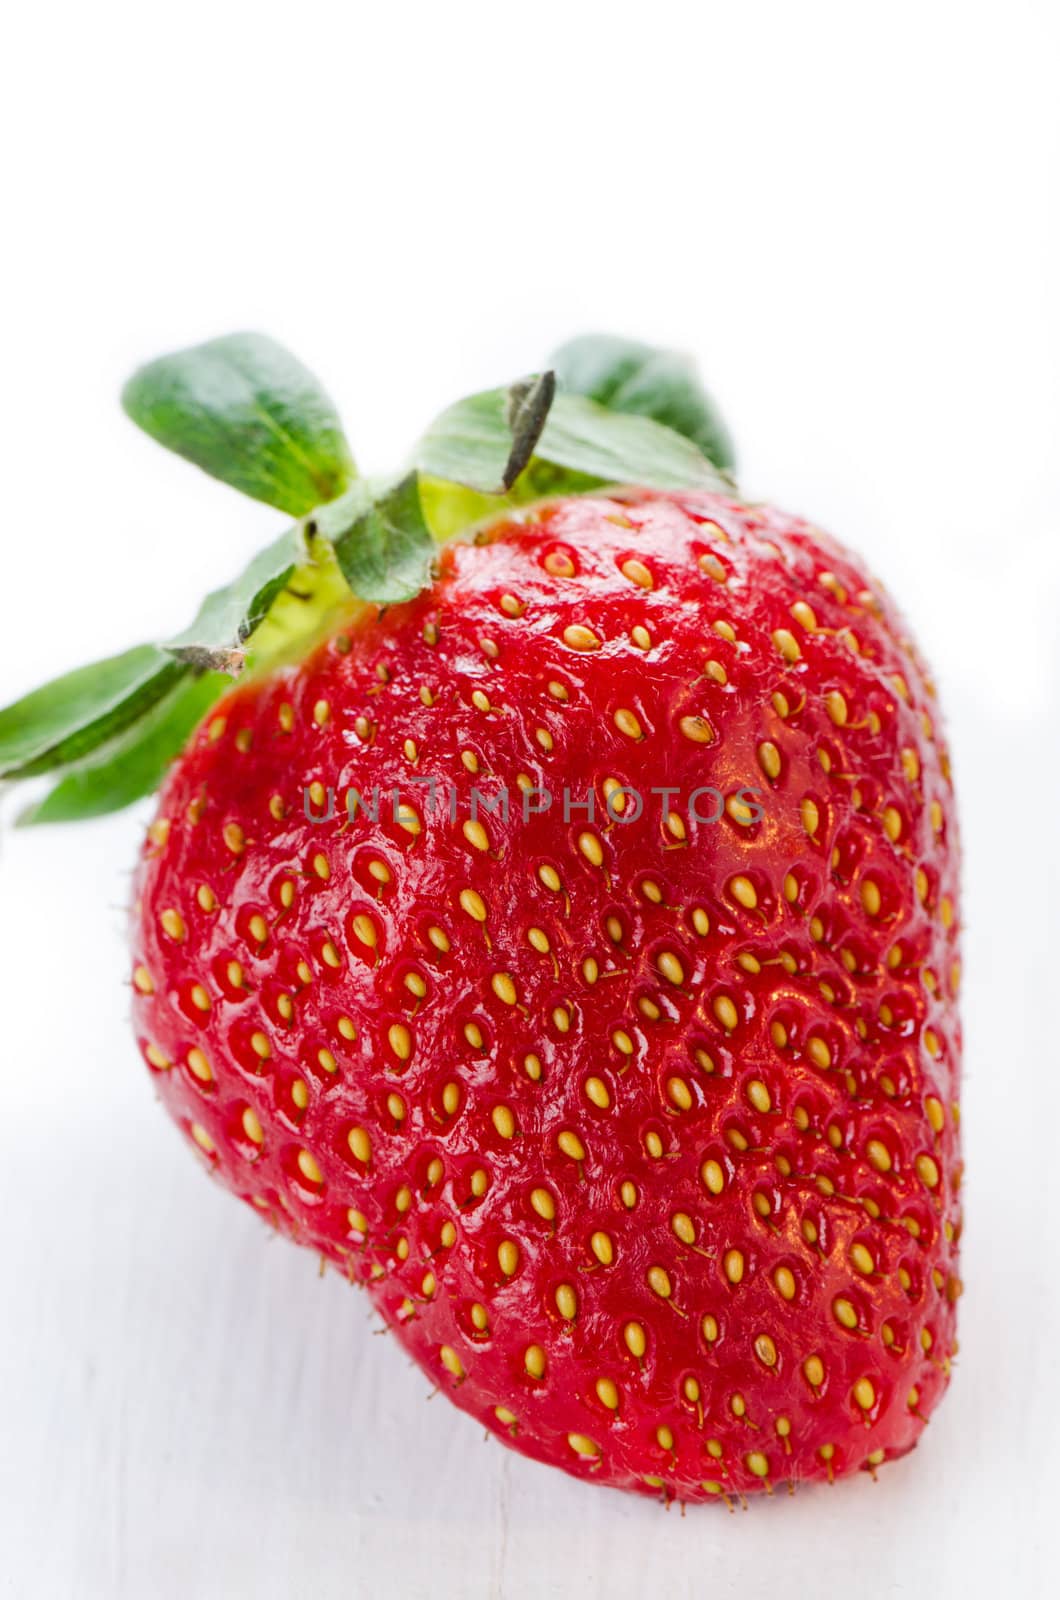 Strawberry on table by Nanisimova